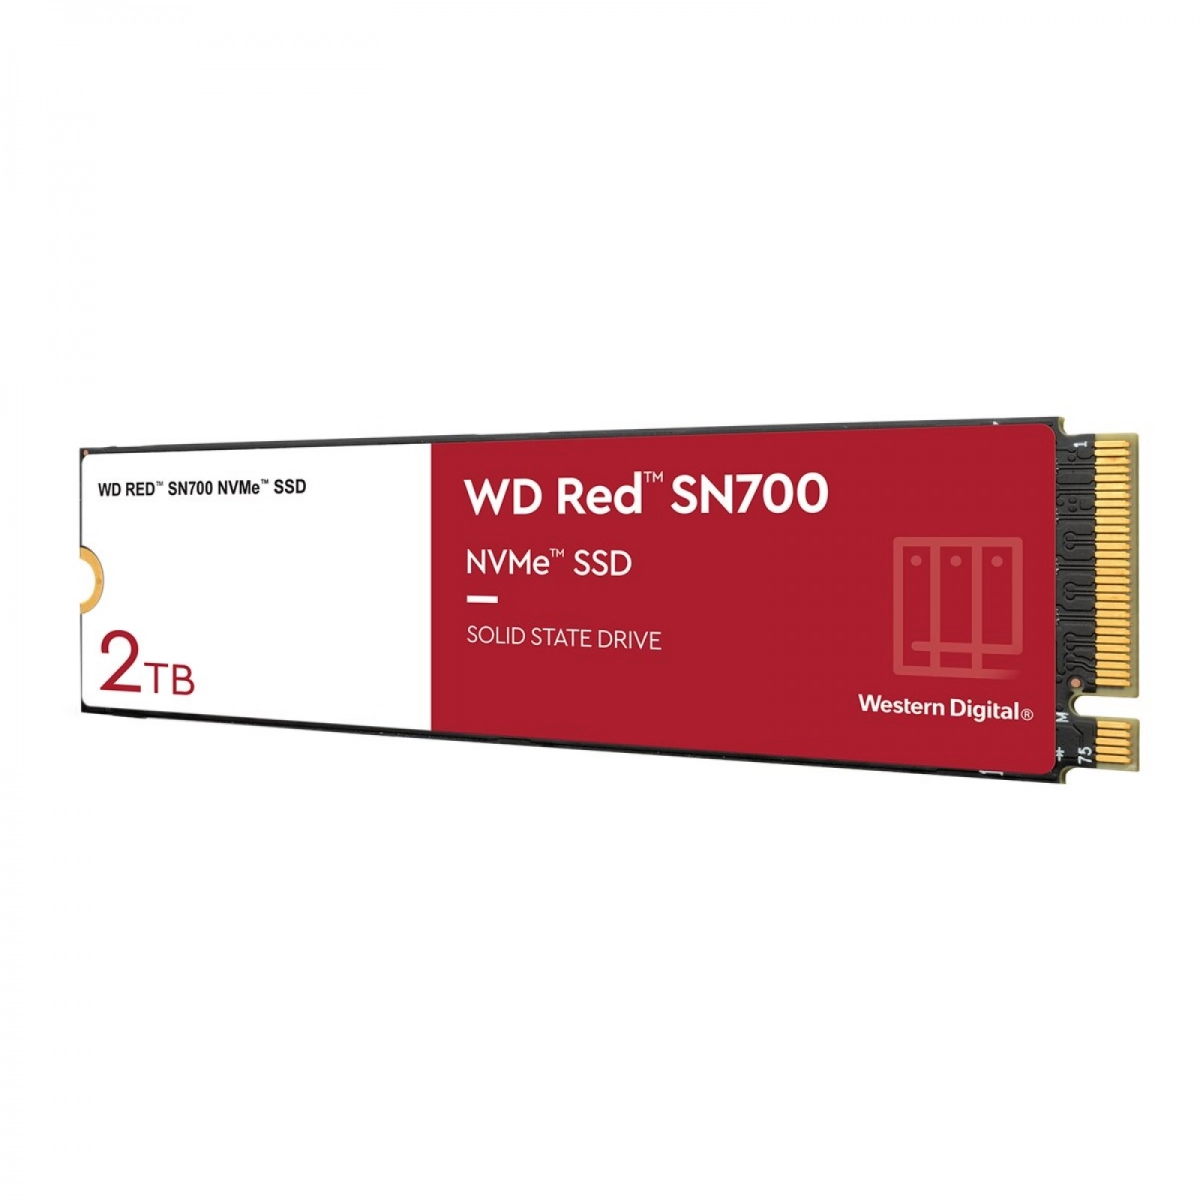 WD Red SN700 2TB NVMe SSD Fast PCIe 3.0 x4 (WDS200T1R0C)